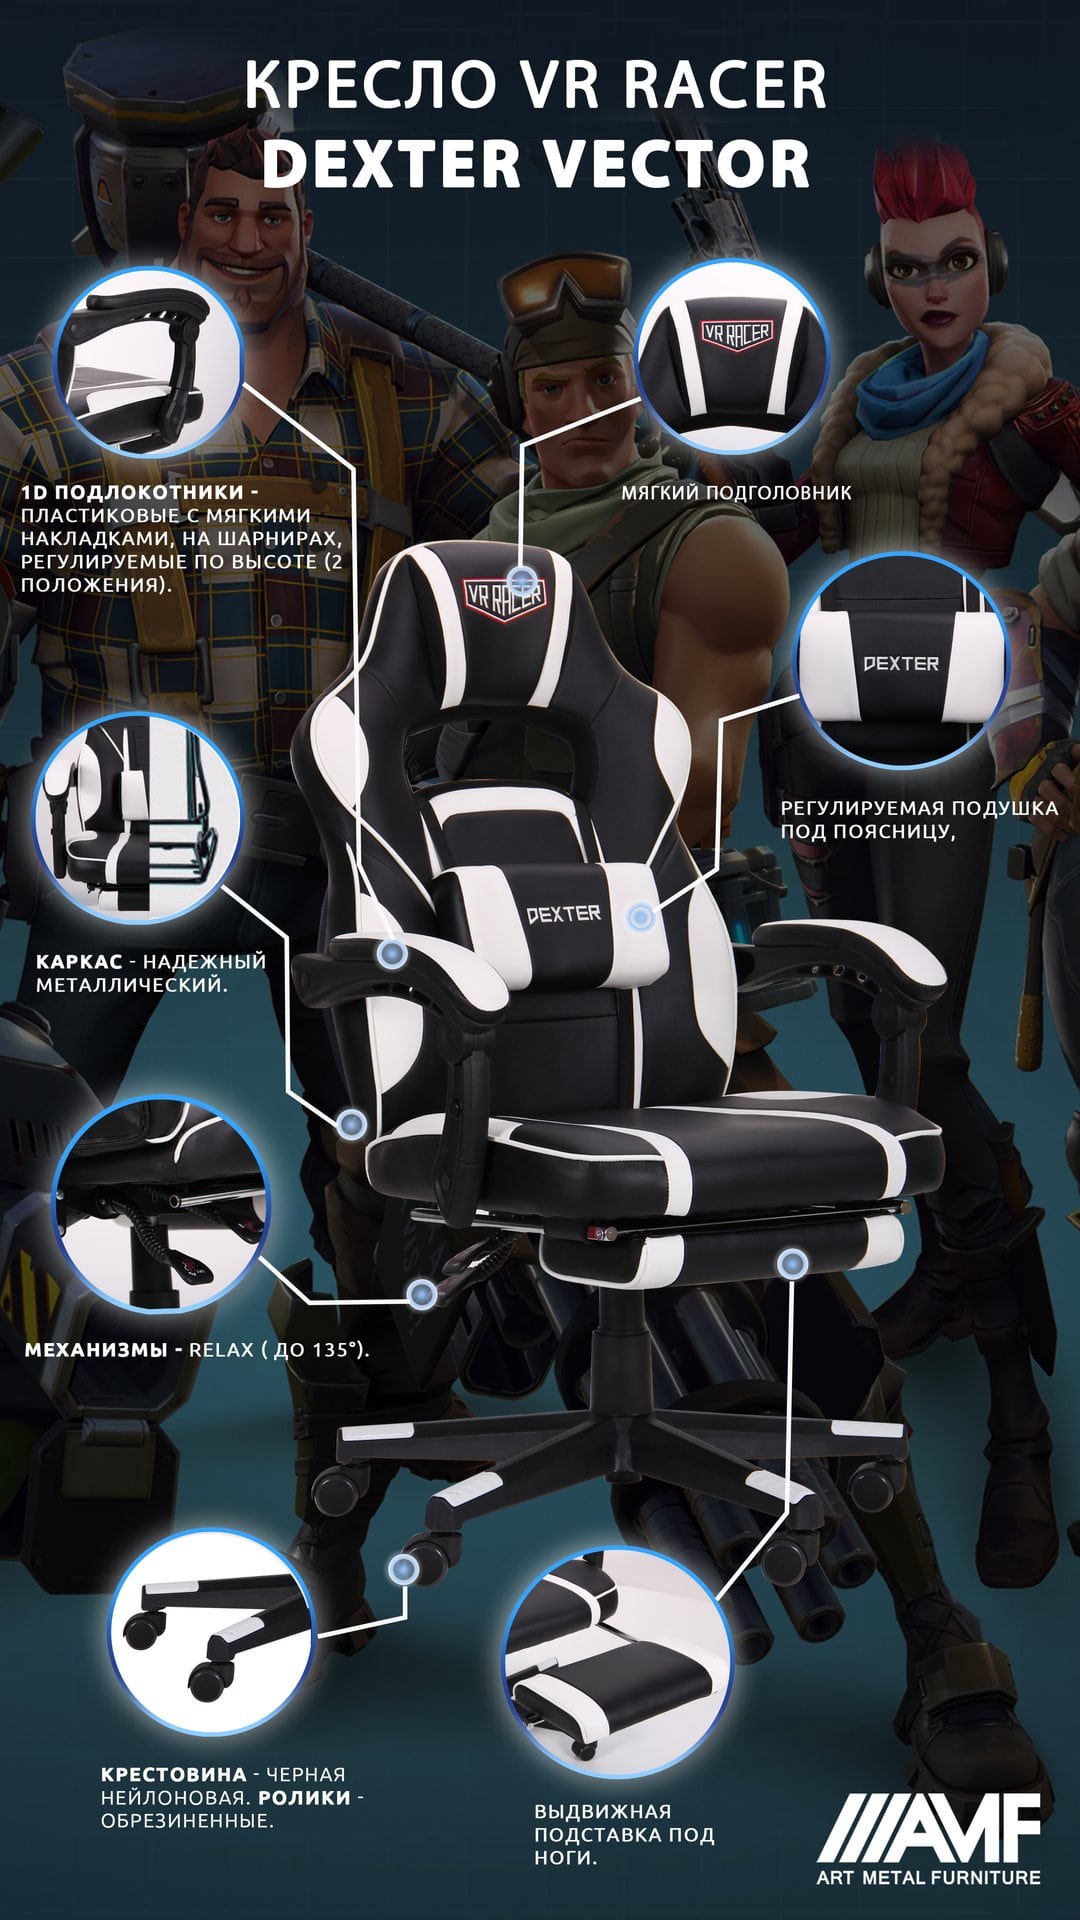 Кресло VR Racer Dexter Vector описание-2